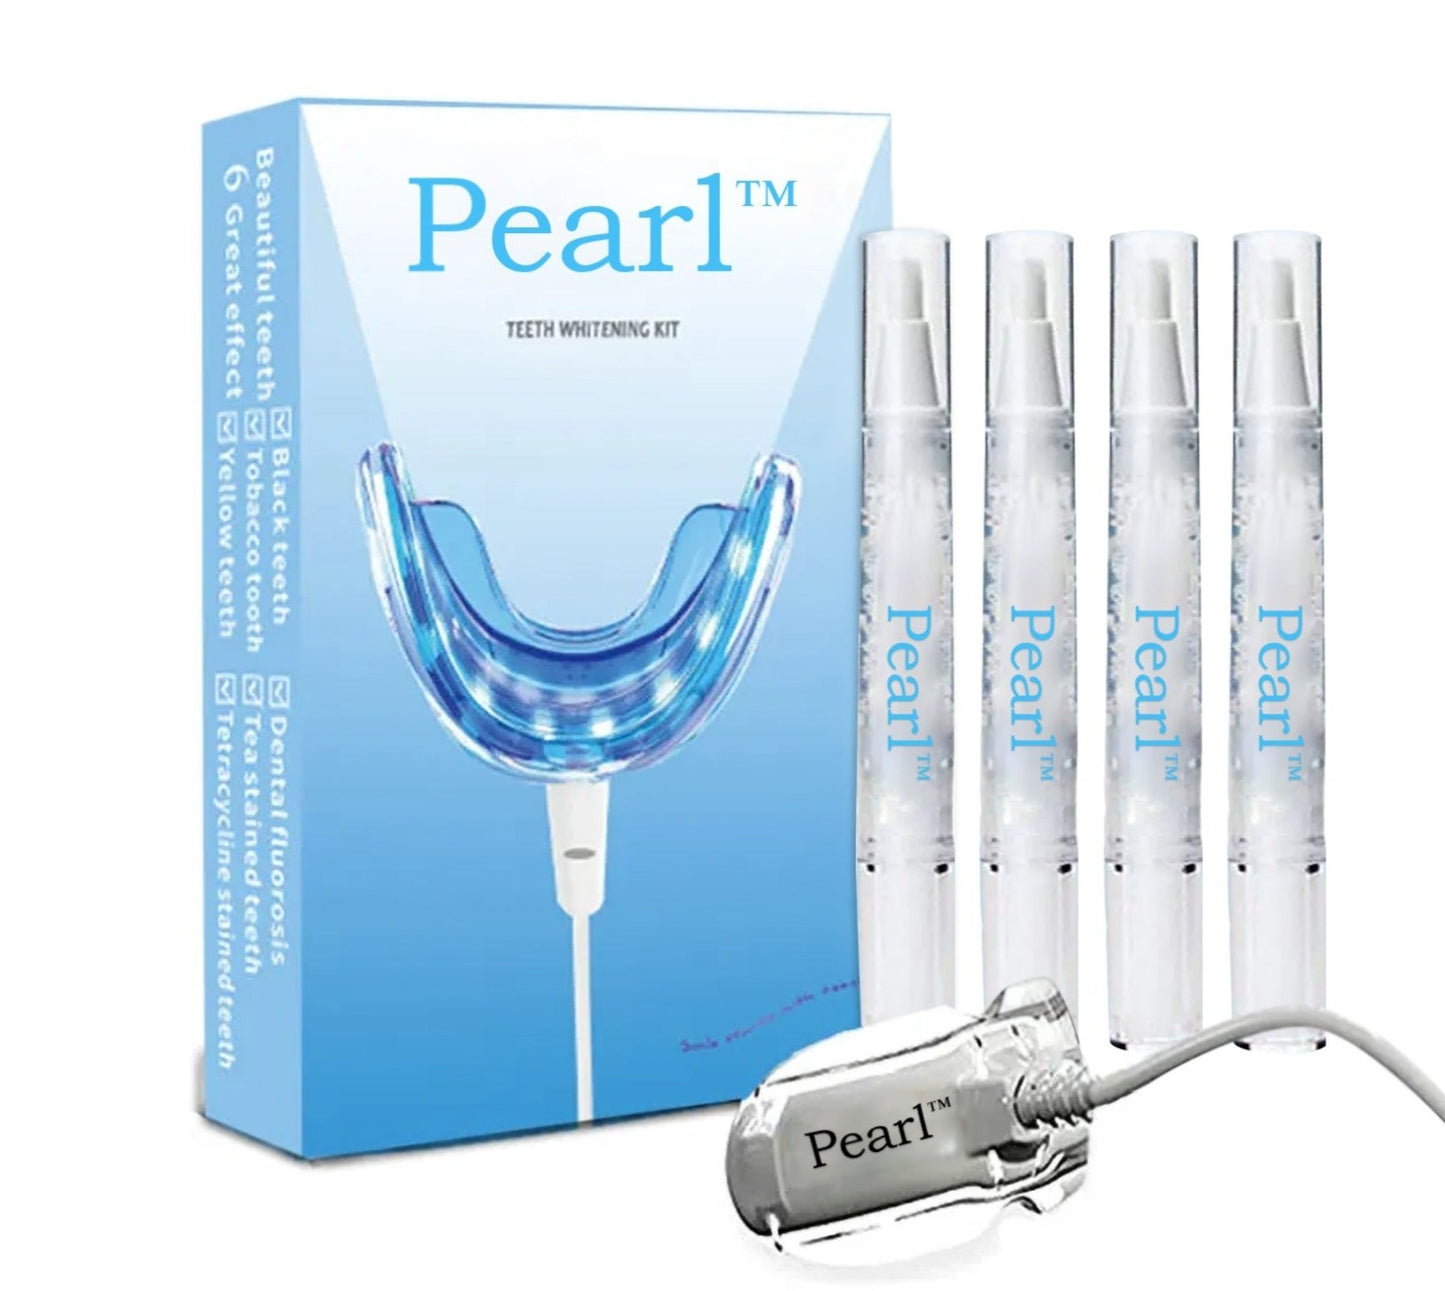 Pearl™ Teeth Whitening Kit